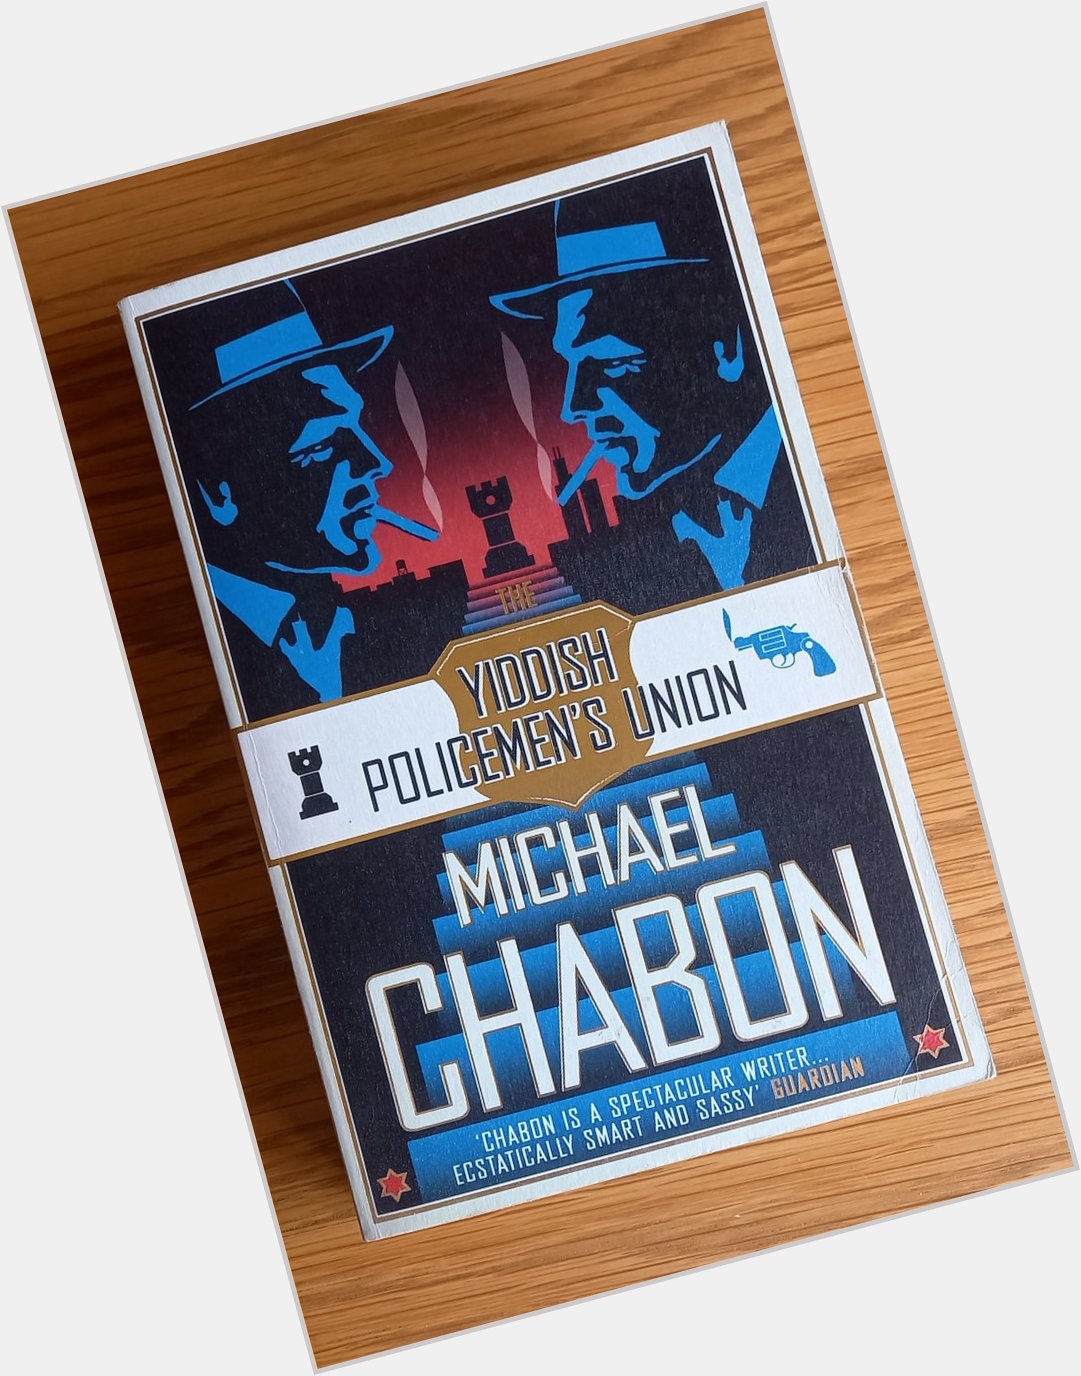 Happy birthday Michael Chabon. in    